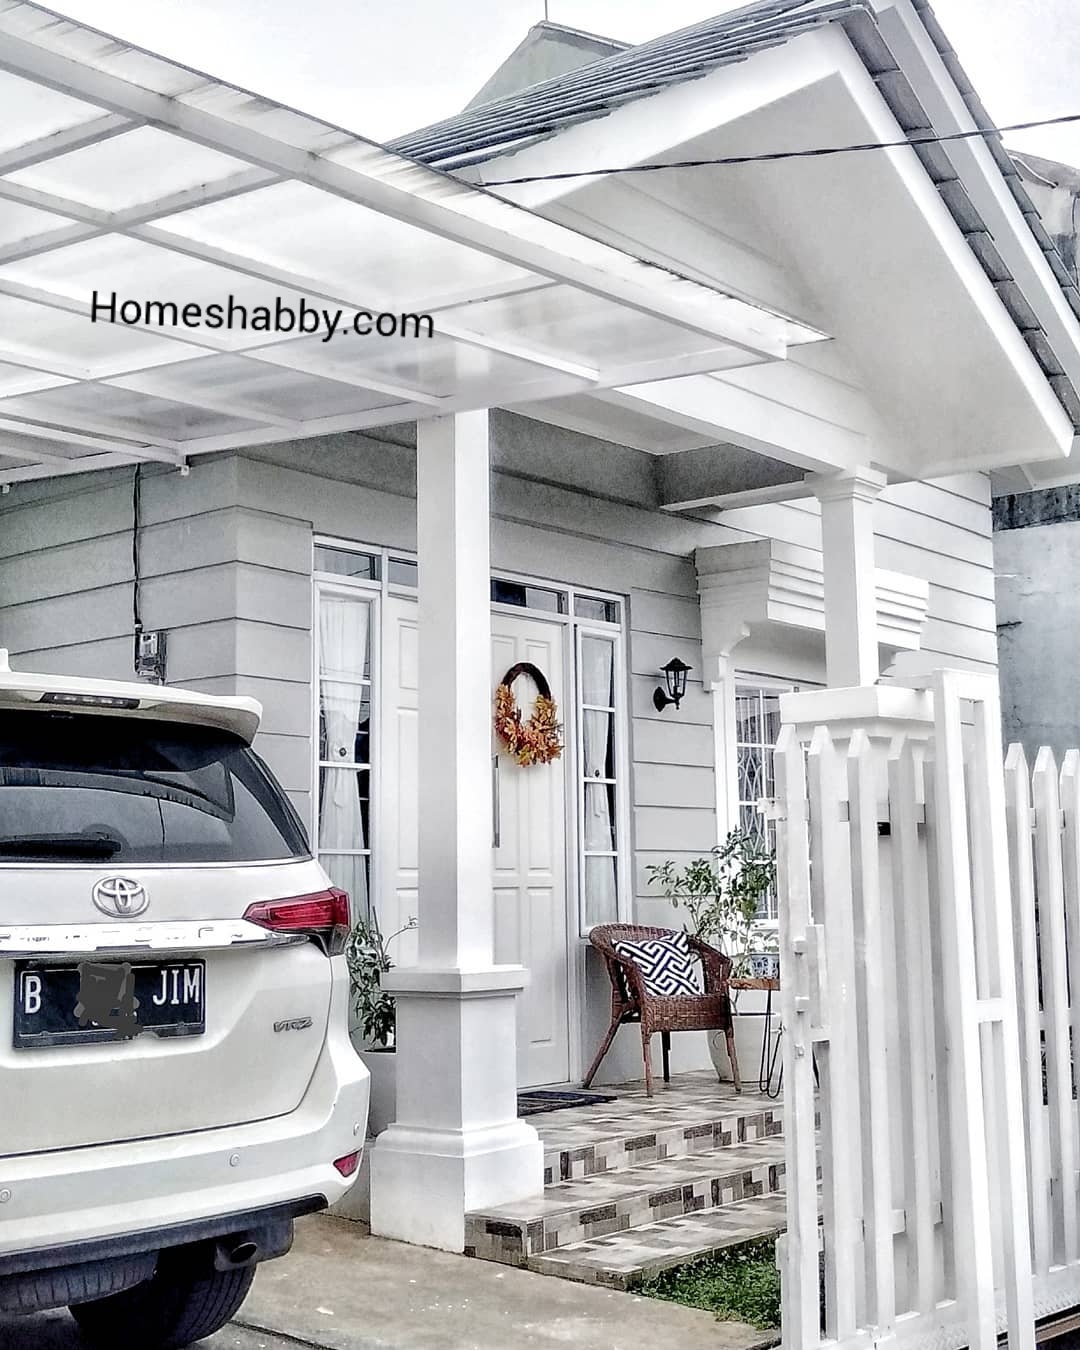 6 Model Desain Tiang Teras Rumah Minimalis Sederhana Terbaru Homeshabby Com Design Home Plans Home Decorating And Interior Design